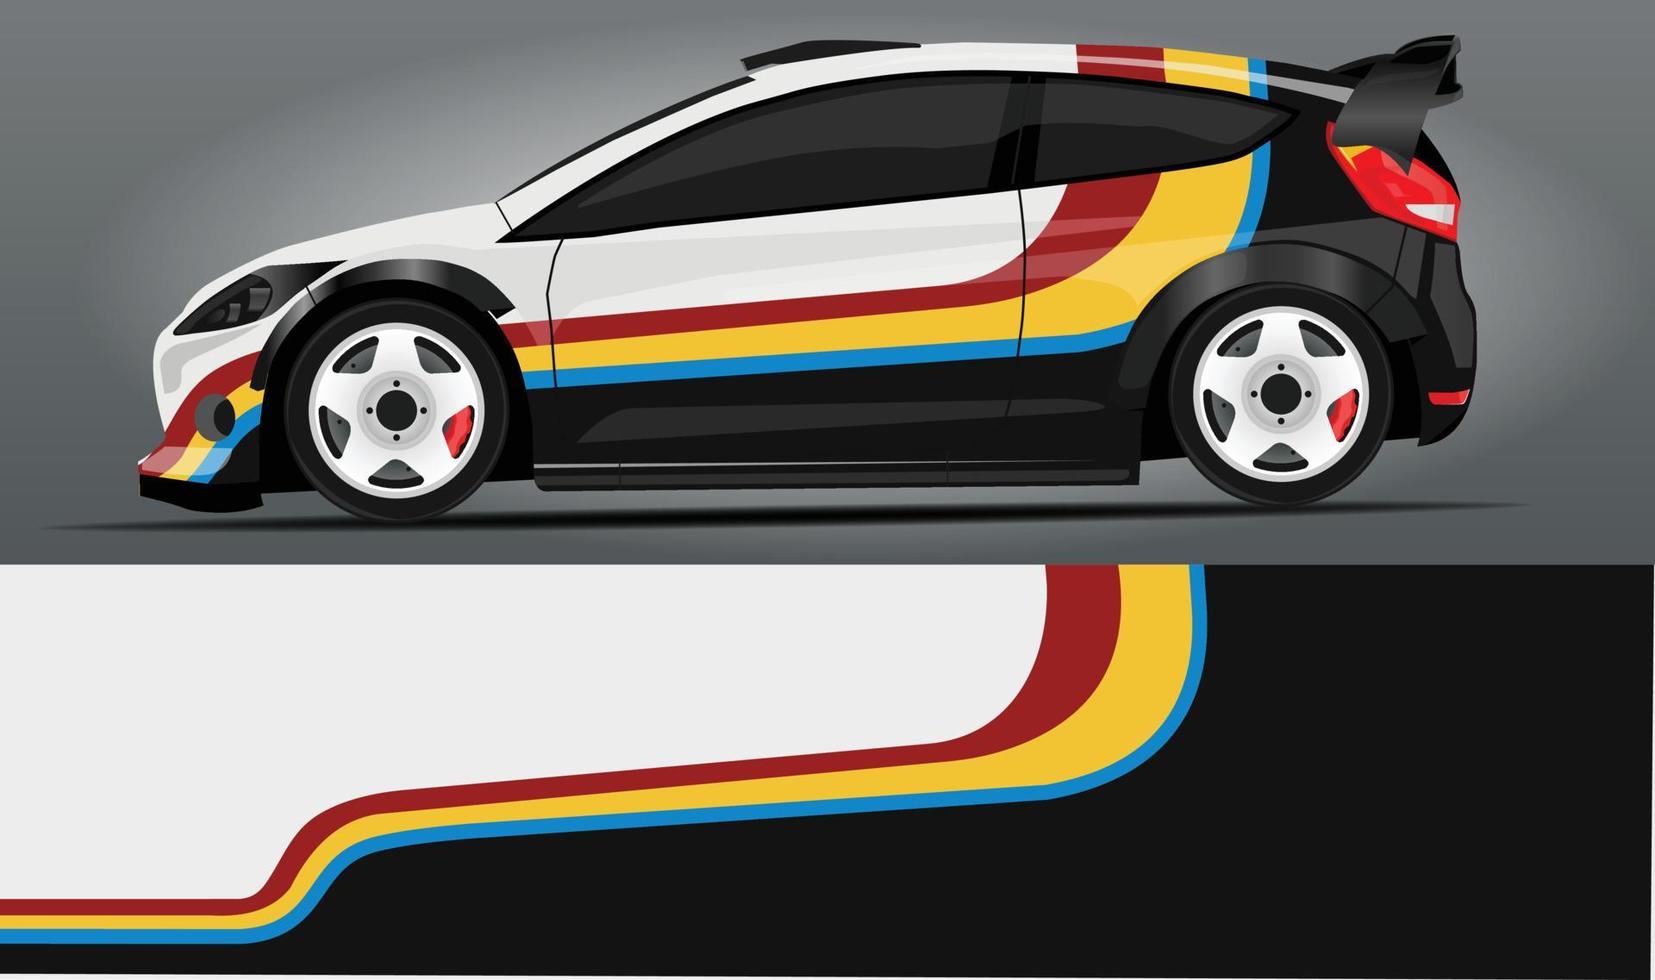 vector de diseño de envoltura de calcomanía de coche. carreras de rayas abstractas para librea, vehículo, rally, carrera, coche.